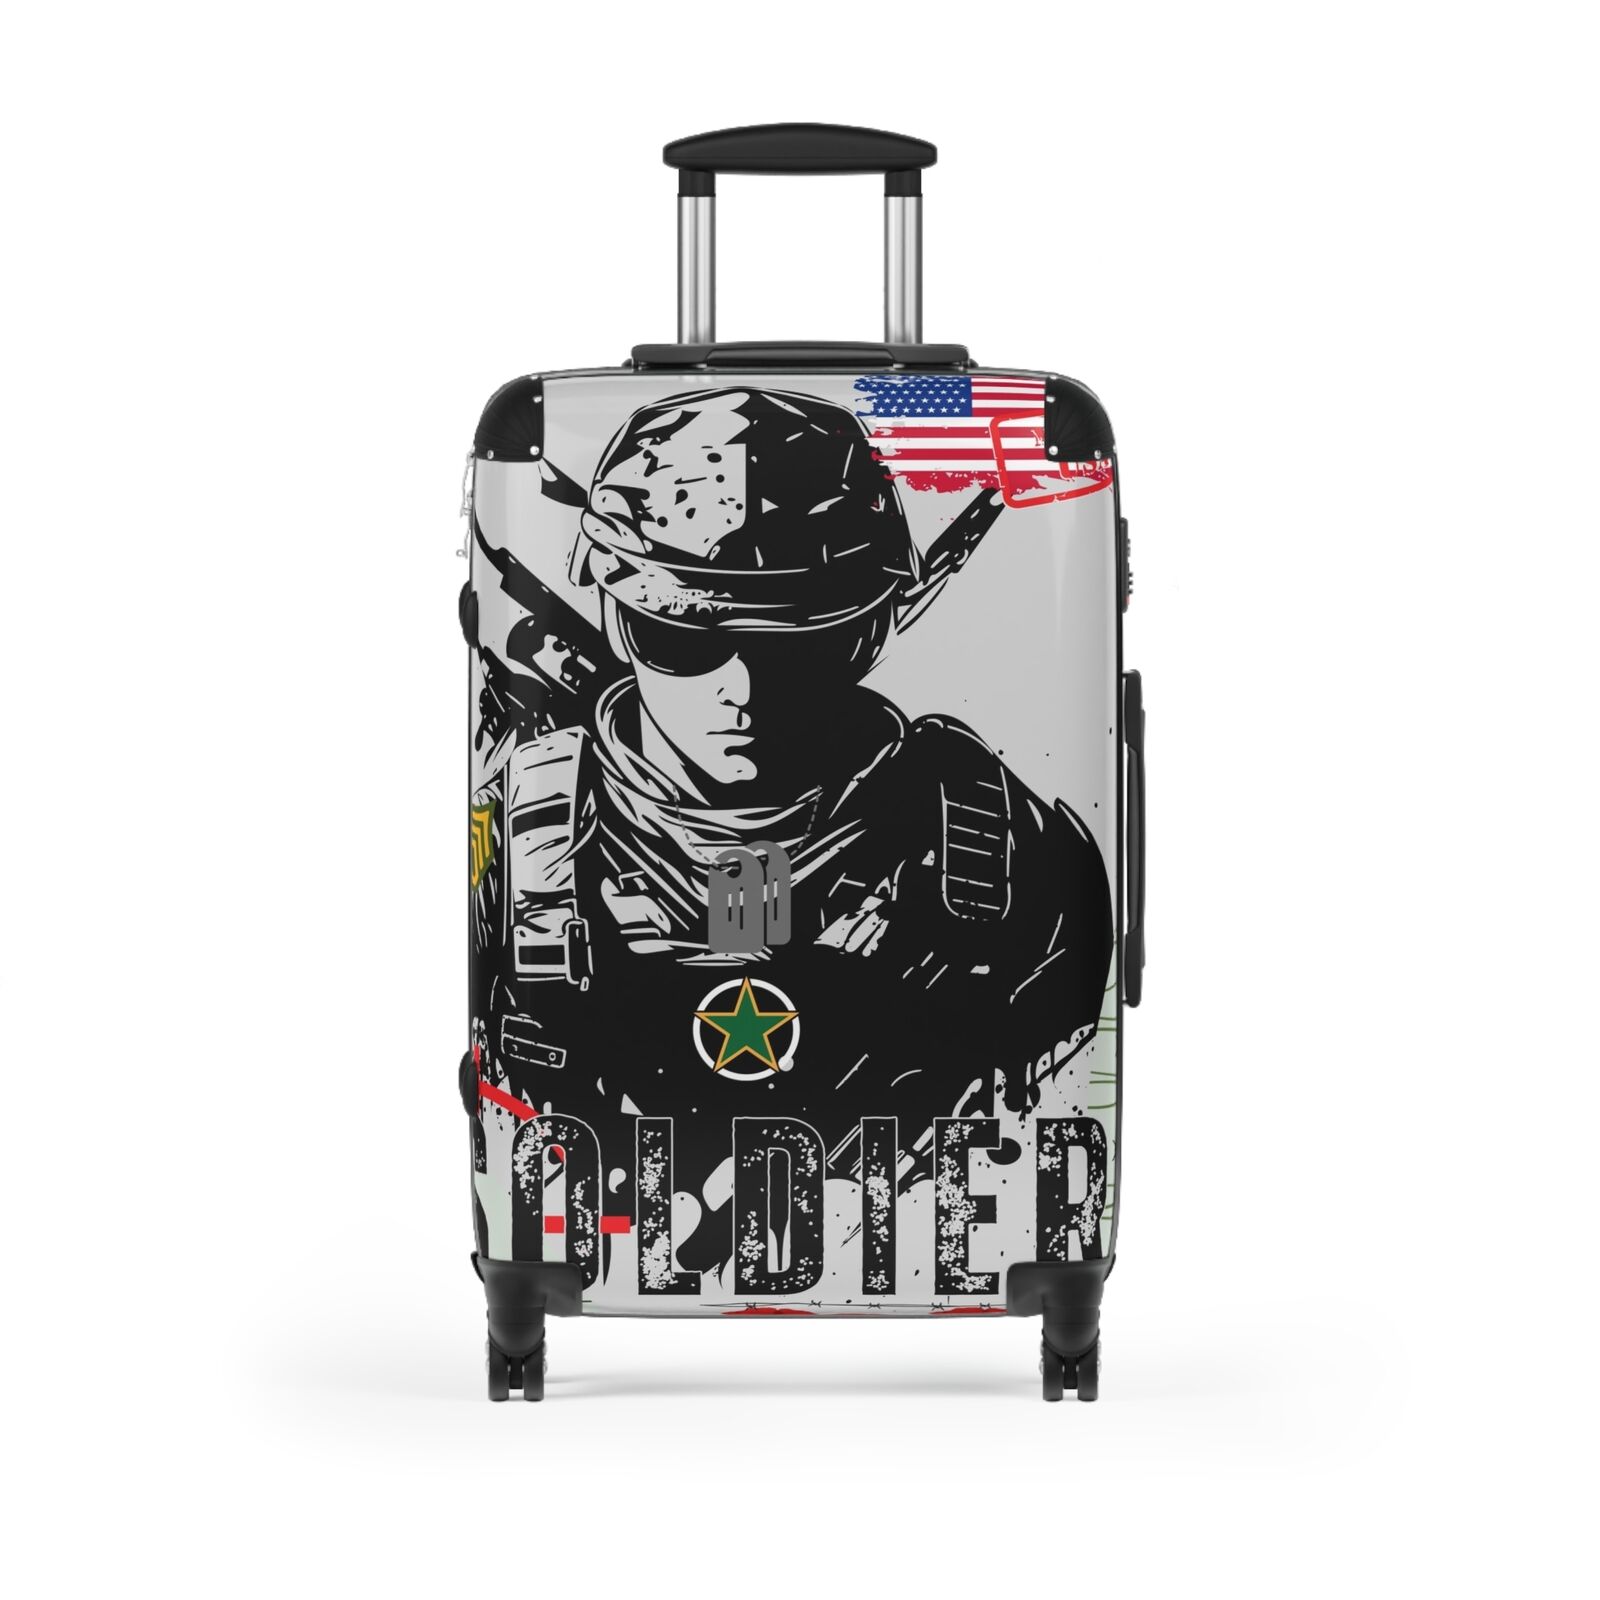 soldier design drawing army tough man Suitcase war concept war original luggage